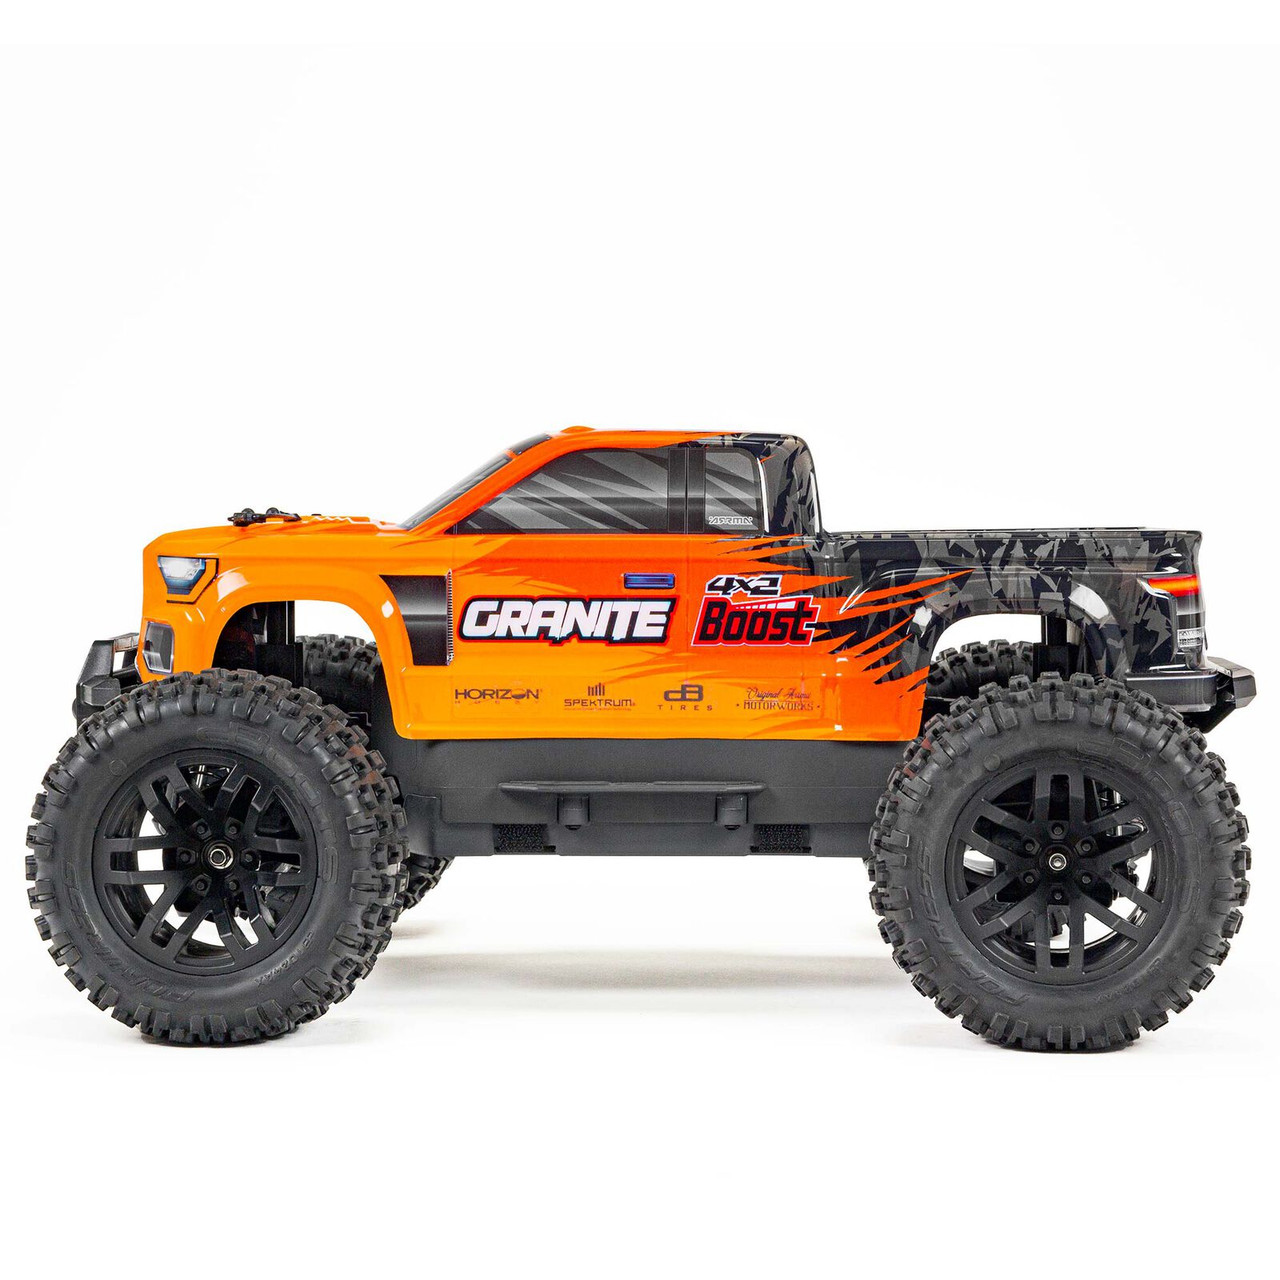 Arrma 1/10 GRANITE 4X2 BOOST MEGA 550 Brushed Monster Truck RTR with Battery & Charger, Orange